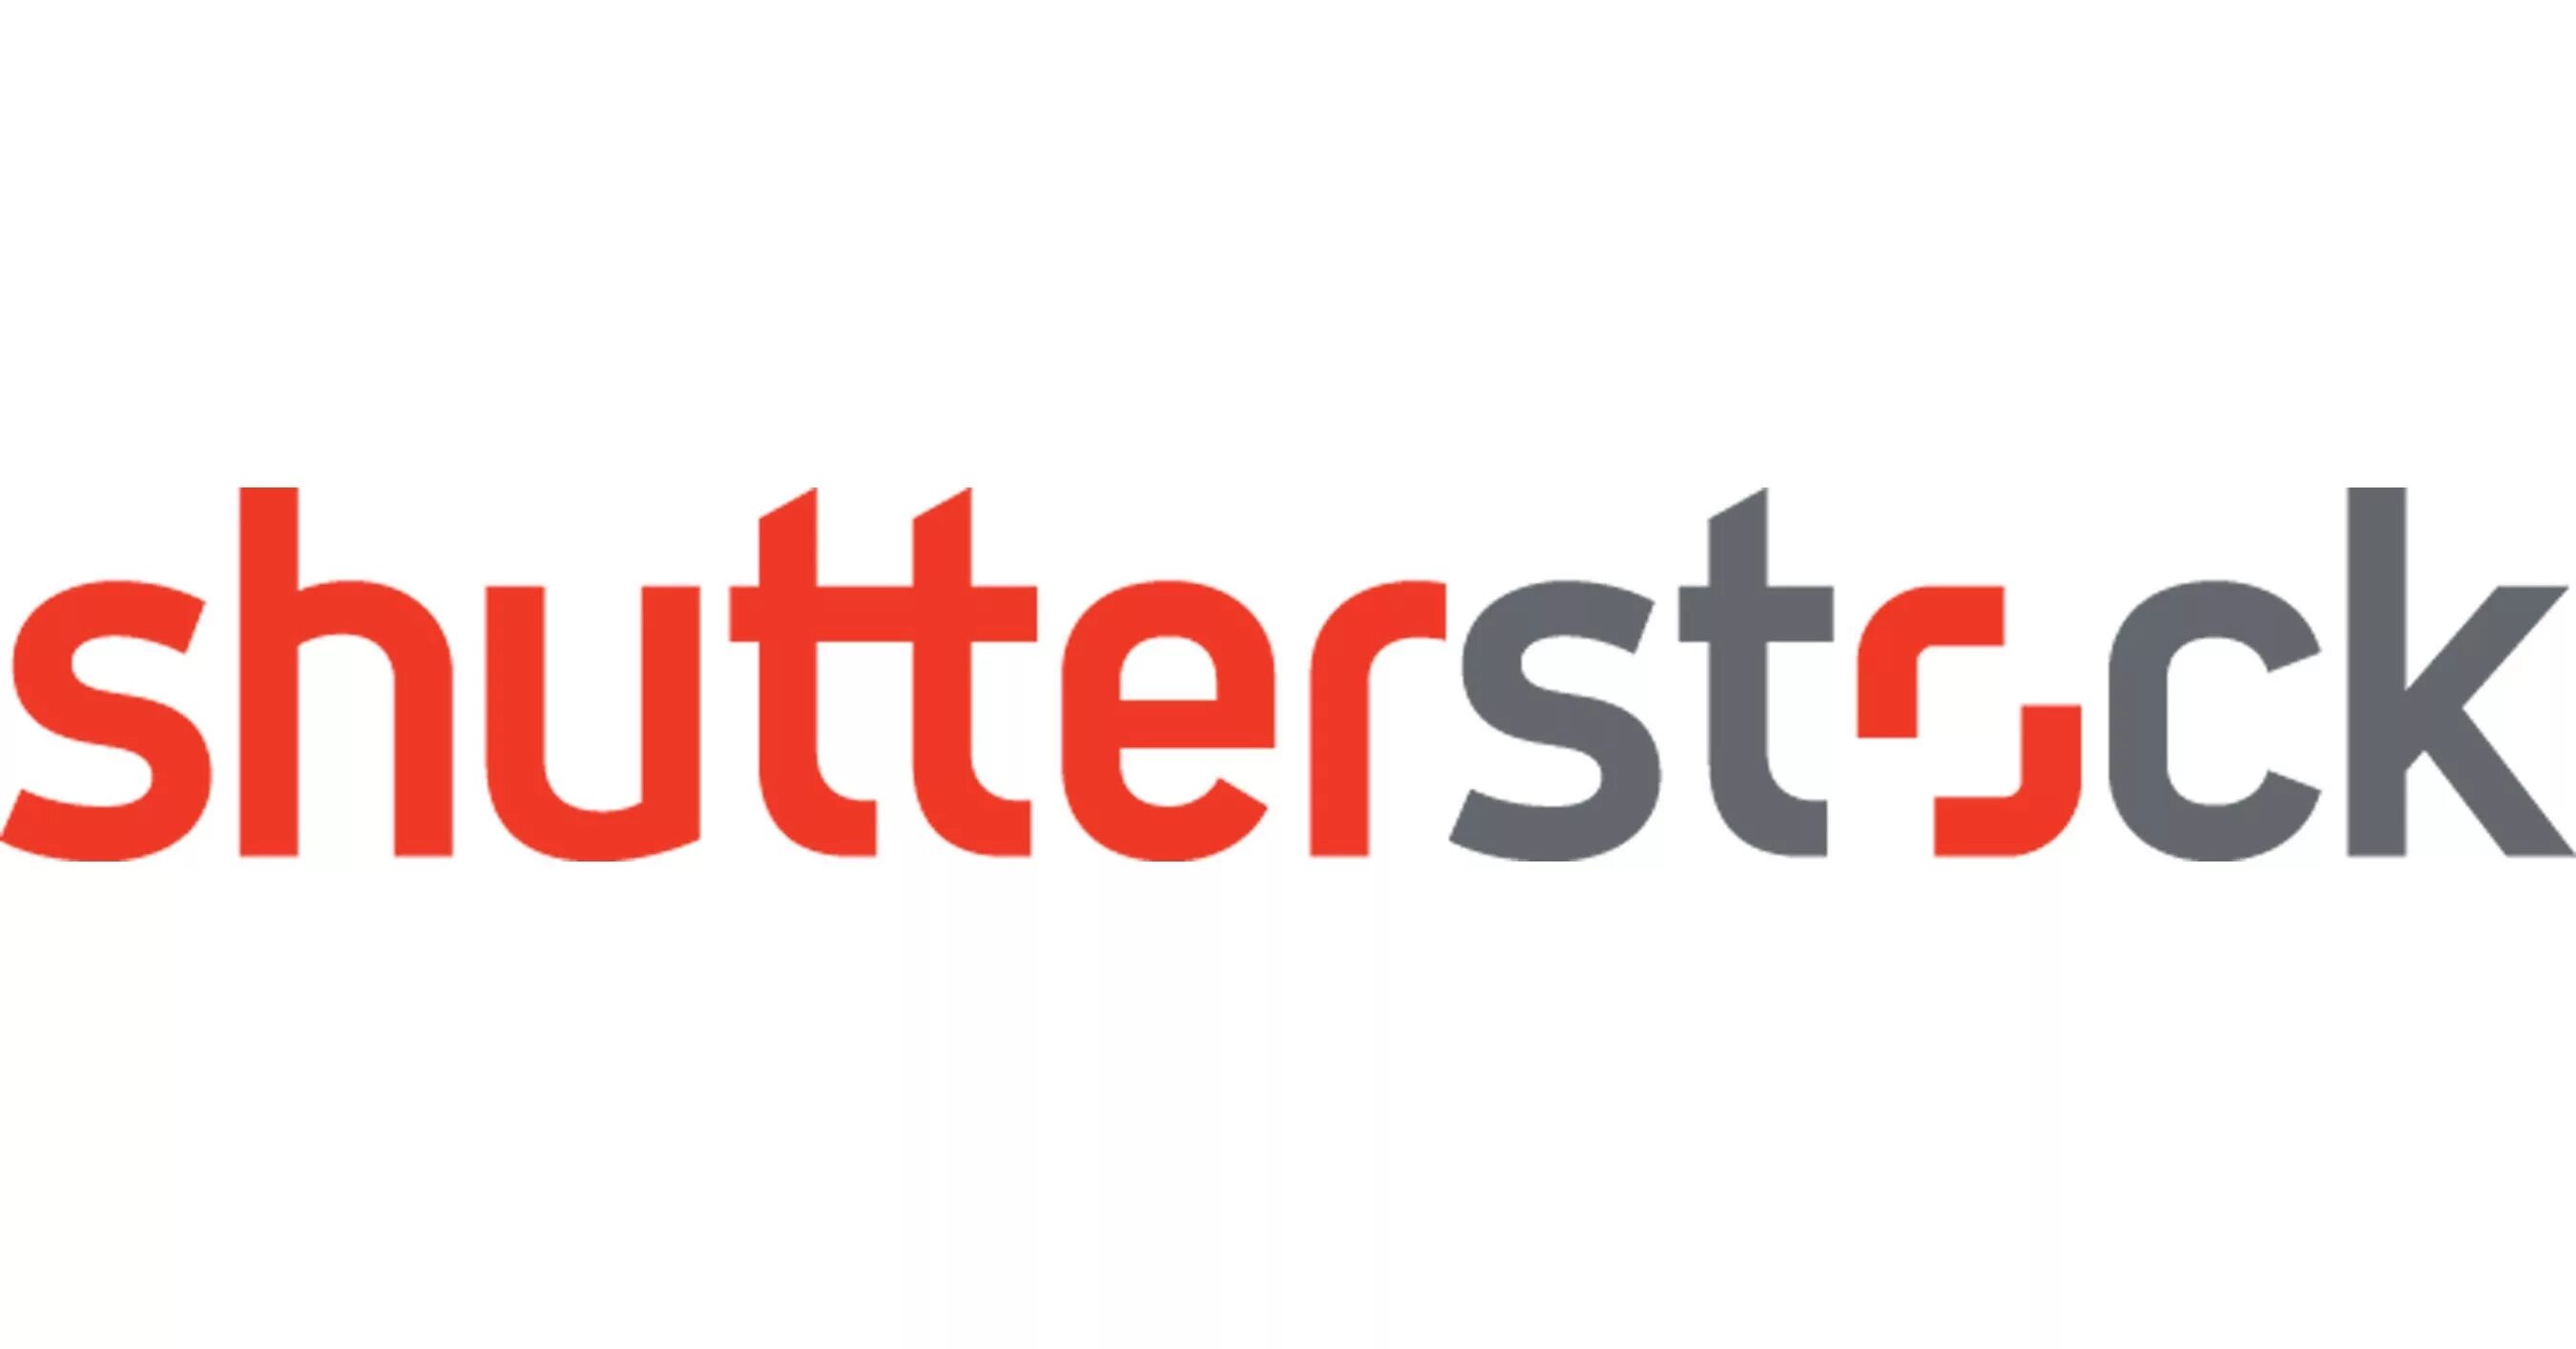 Shutterstock logo. Shutterstock о сайте. Шаттерсток банк изображений.